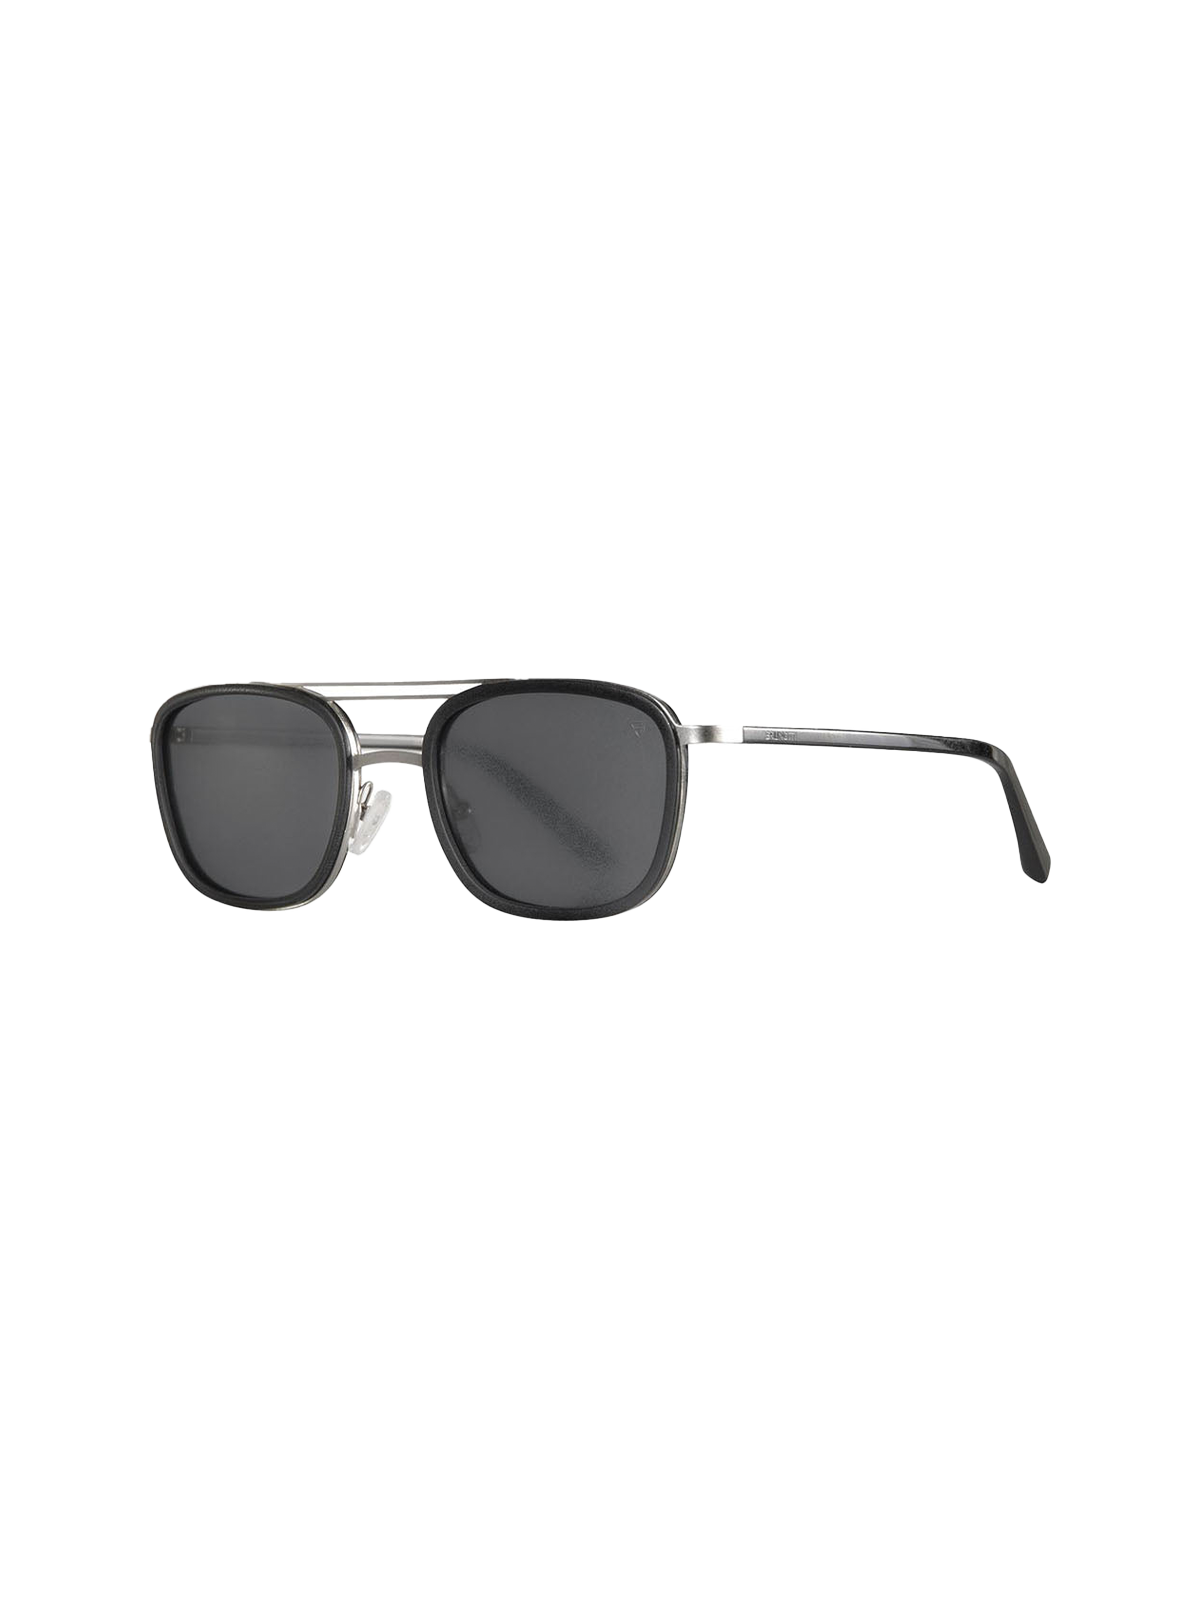 Ladoga 2 Men Sunglasses | Black